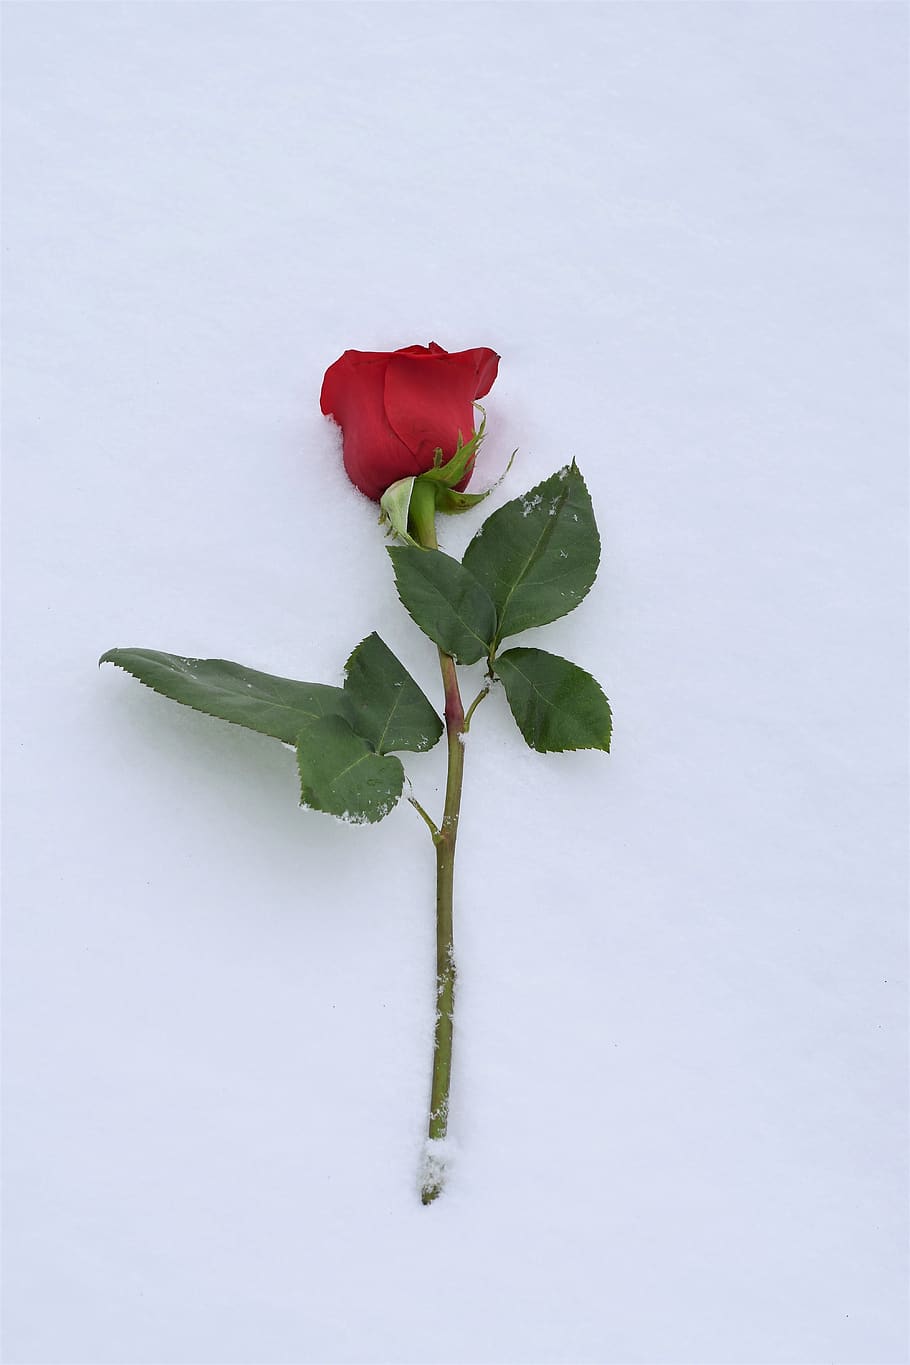 red rose in snow, love symbol, true love never dies, winter